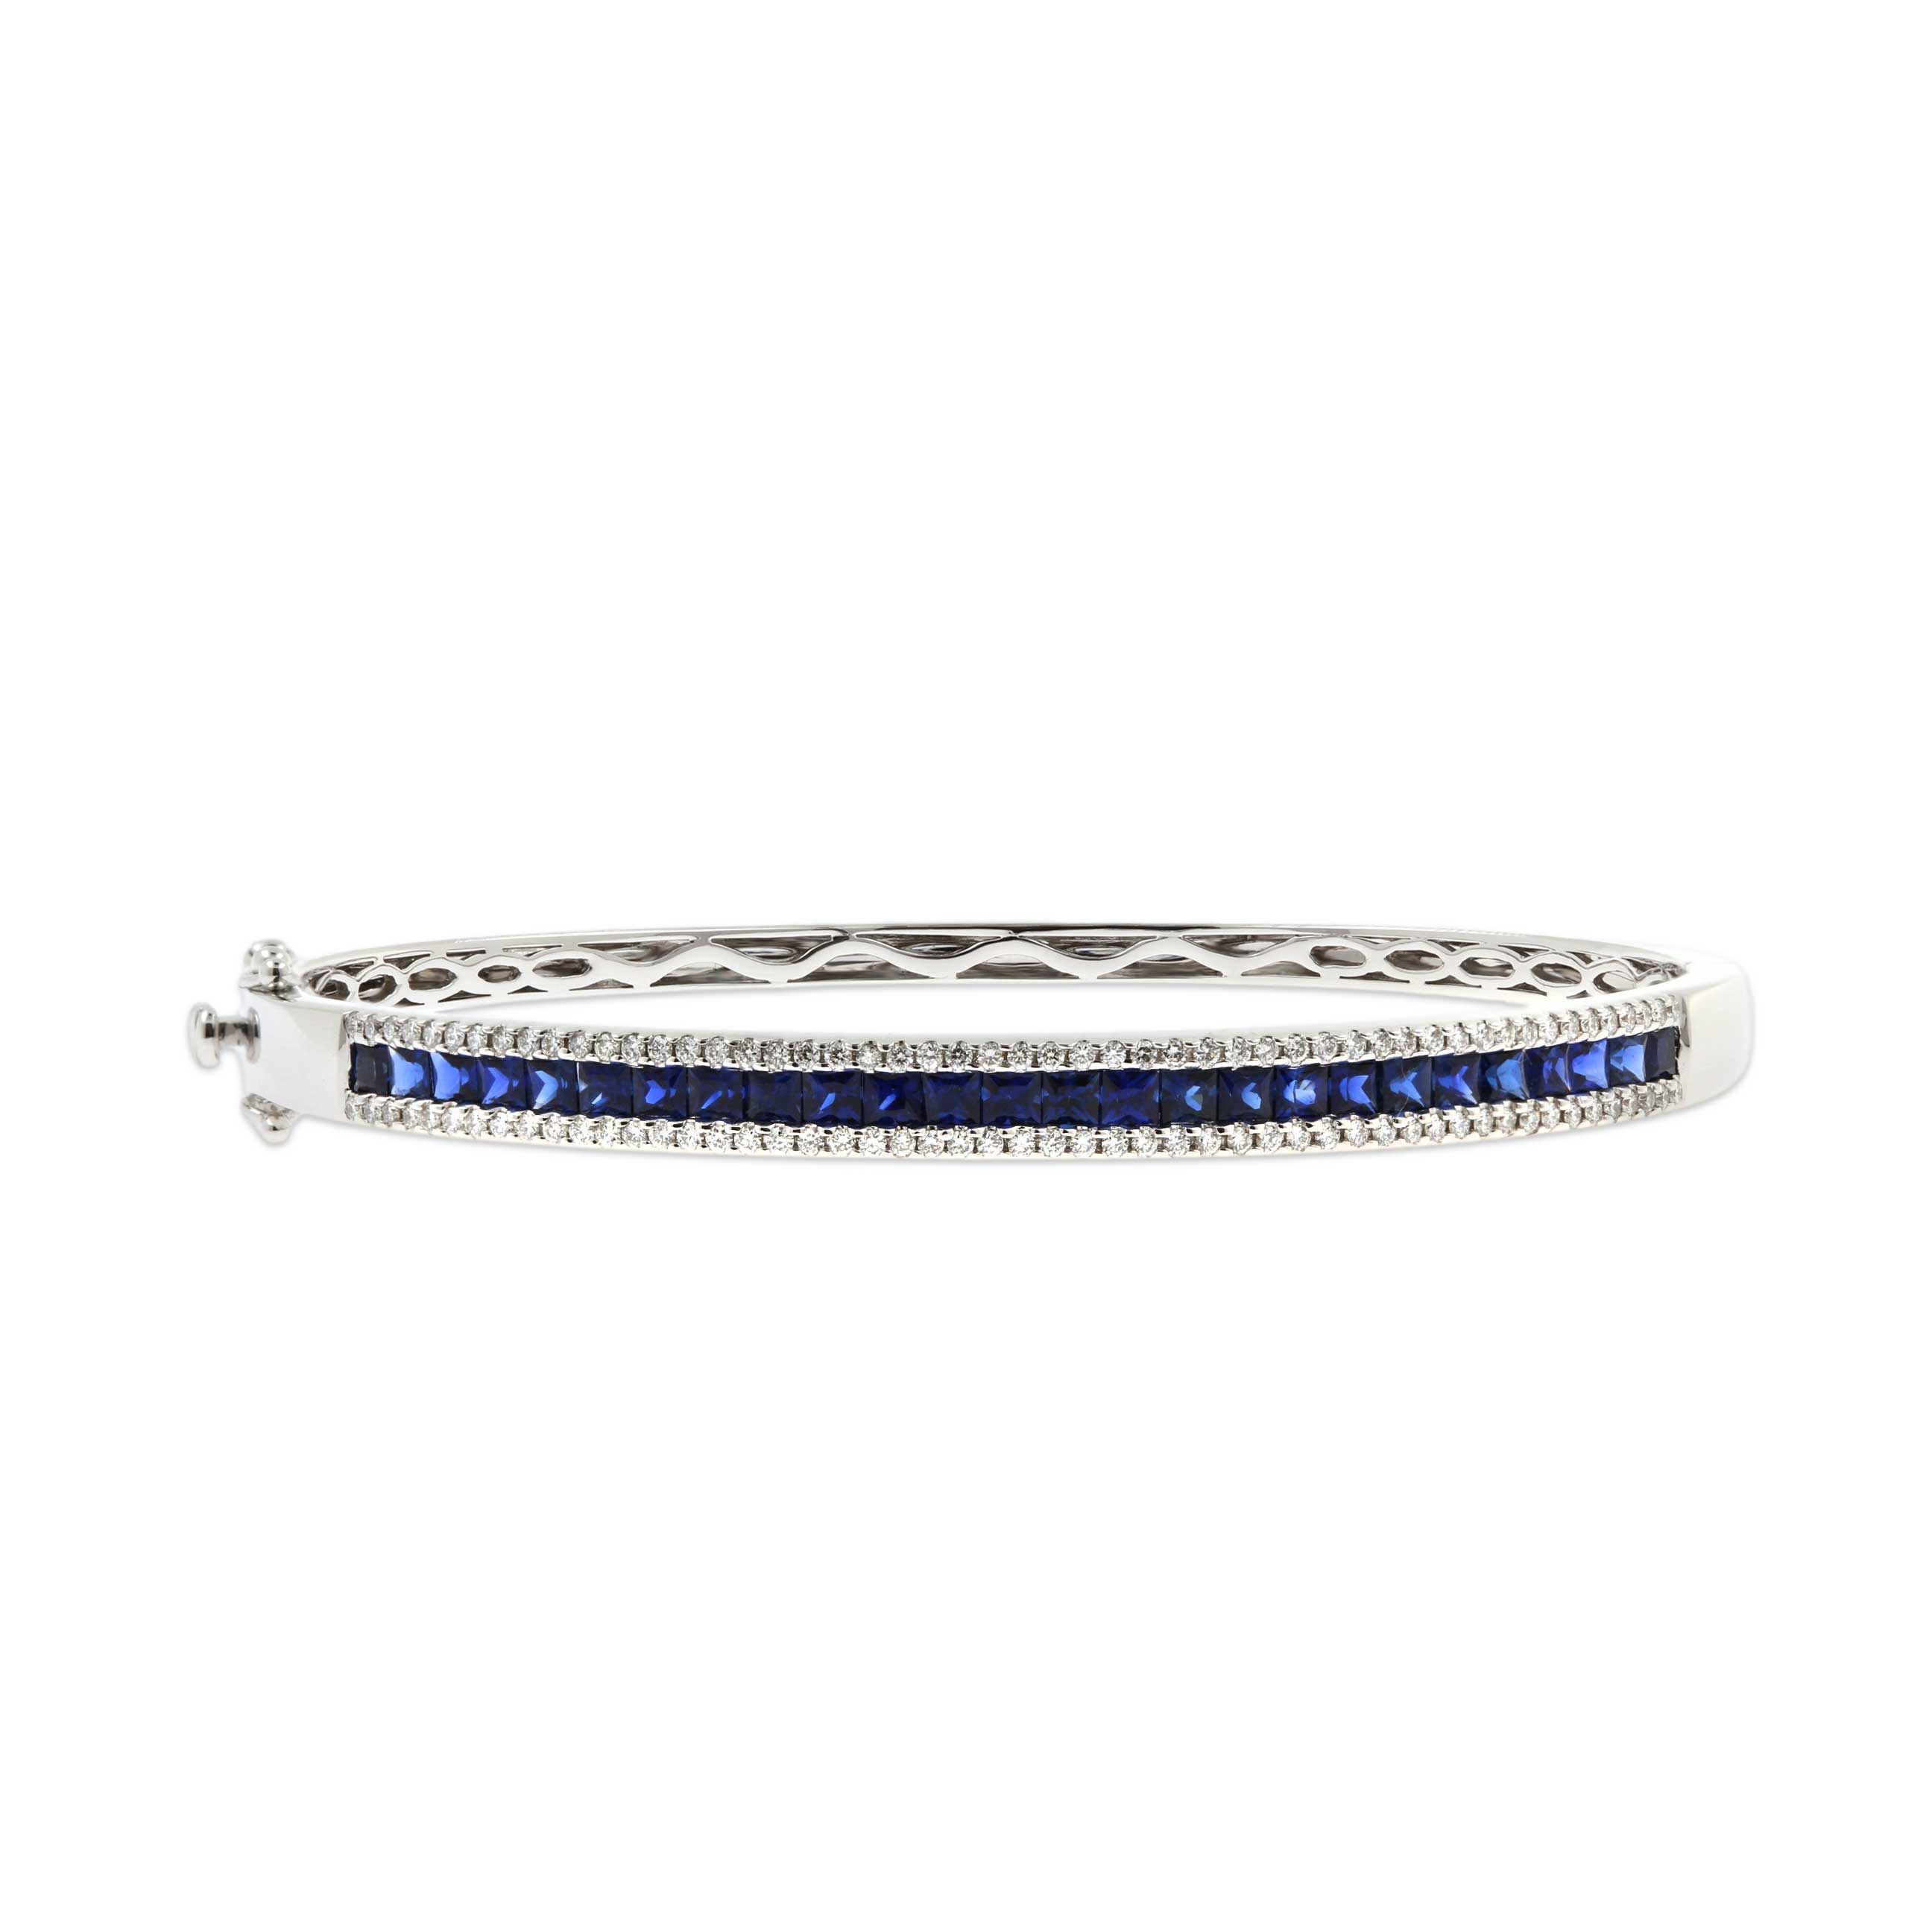 Gemstone Blue Sapphire Bracelet Size 8 Inches